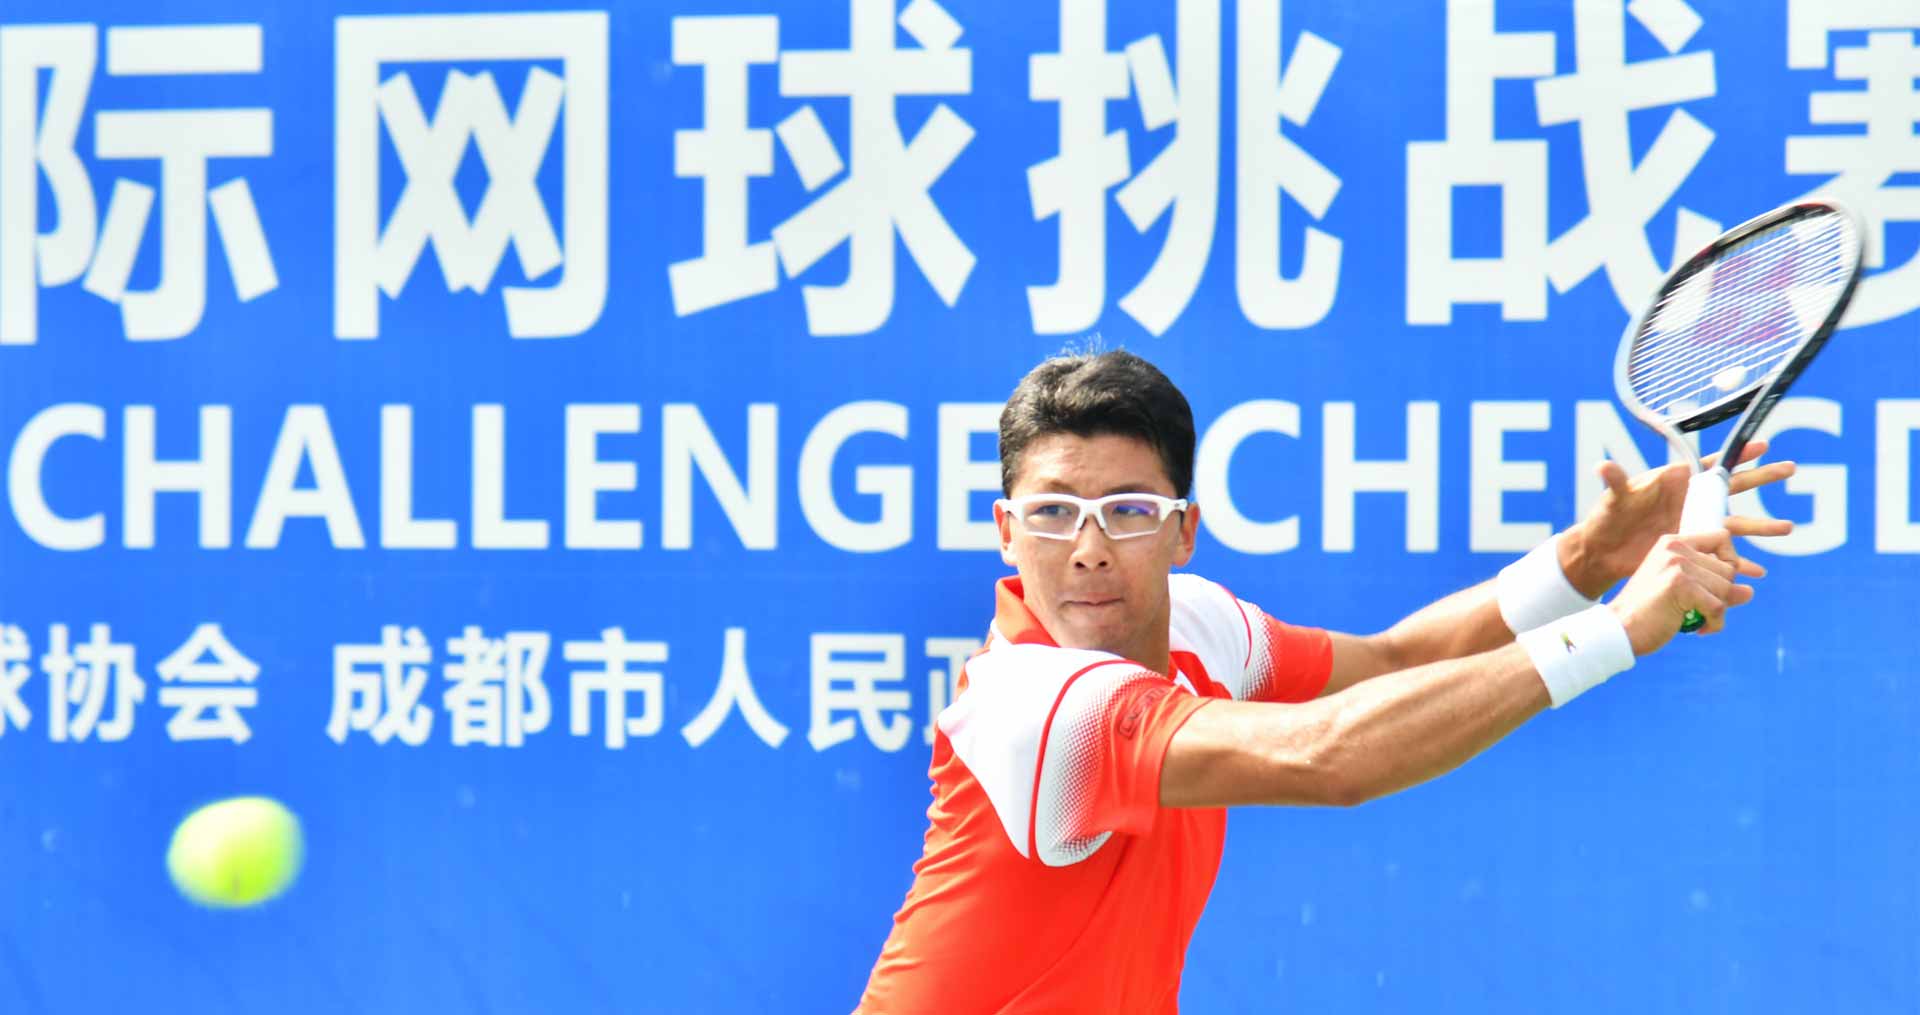 2019 International Challenger Chengdu